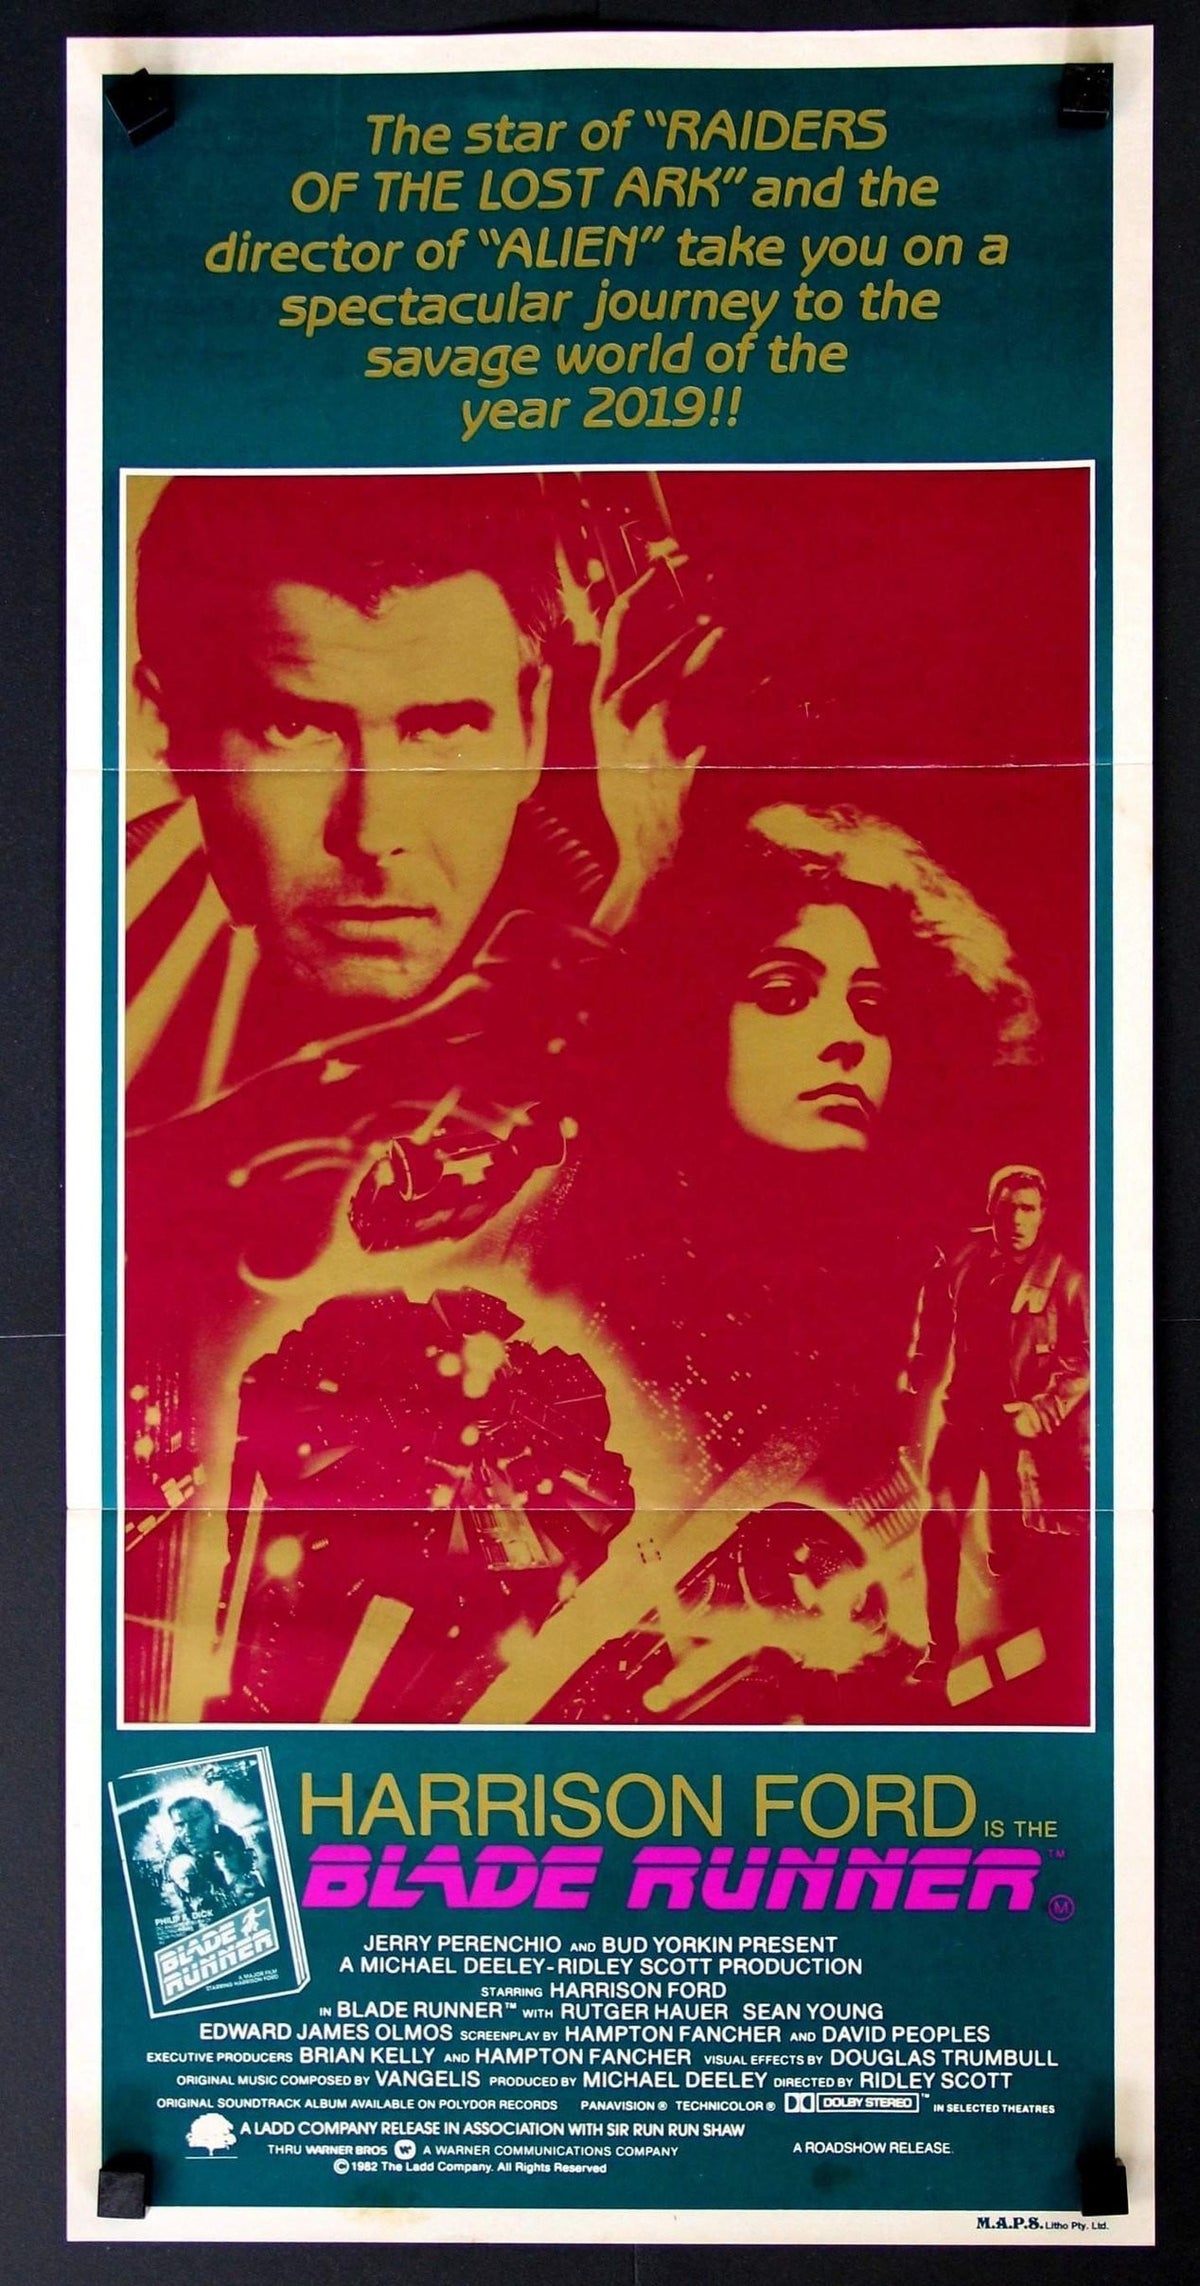 Blade Runner (1982) original movie poster for sale at Original Film Art